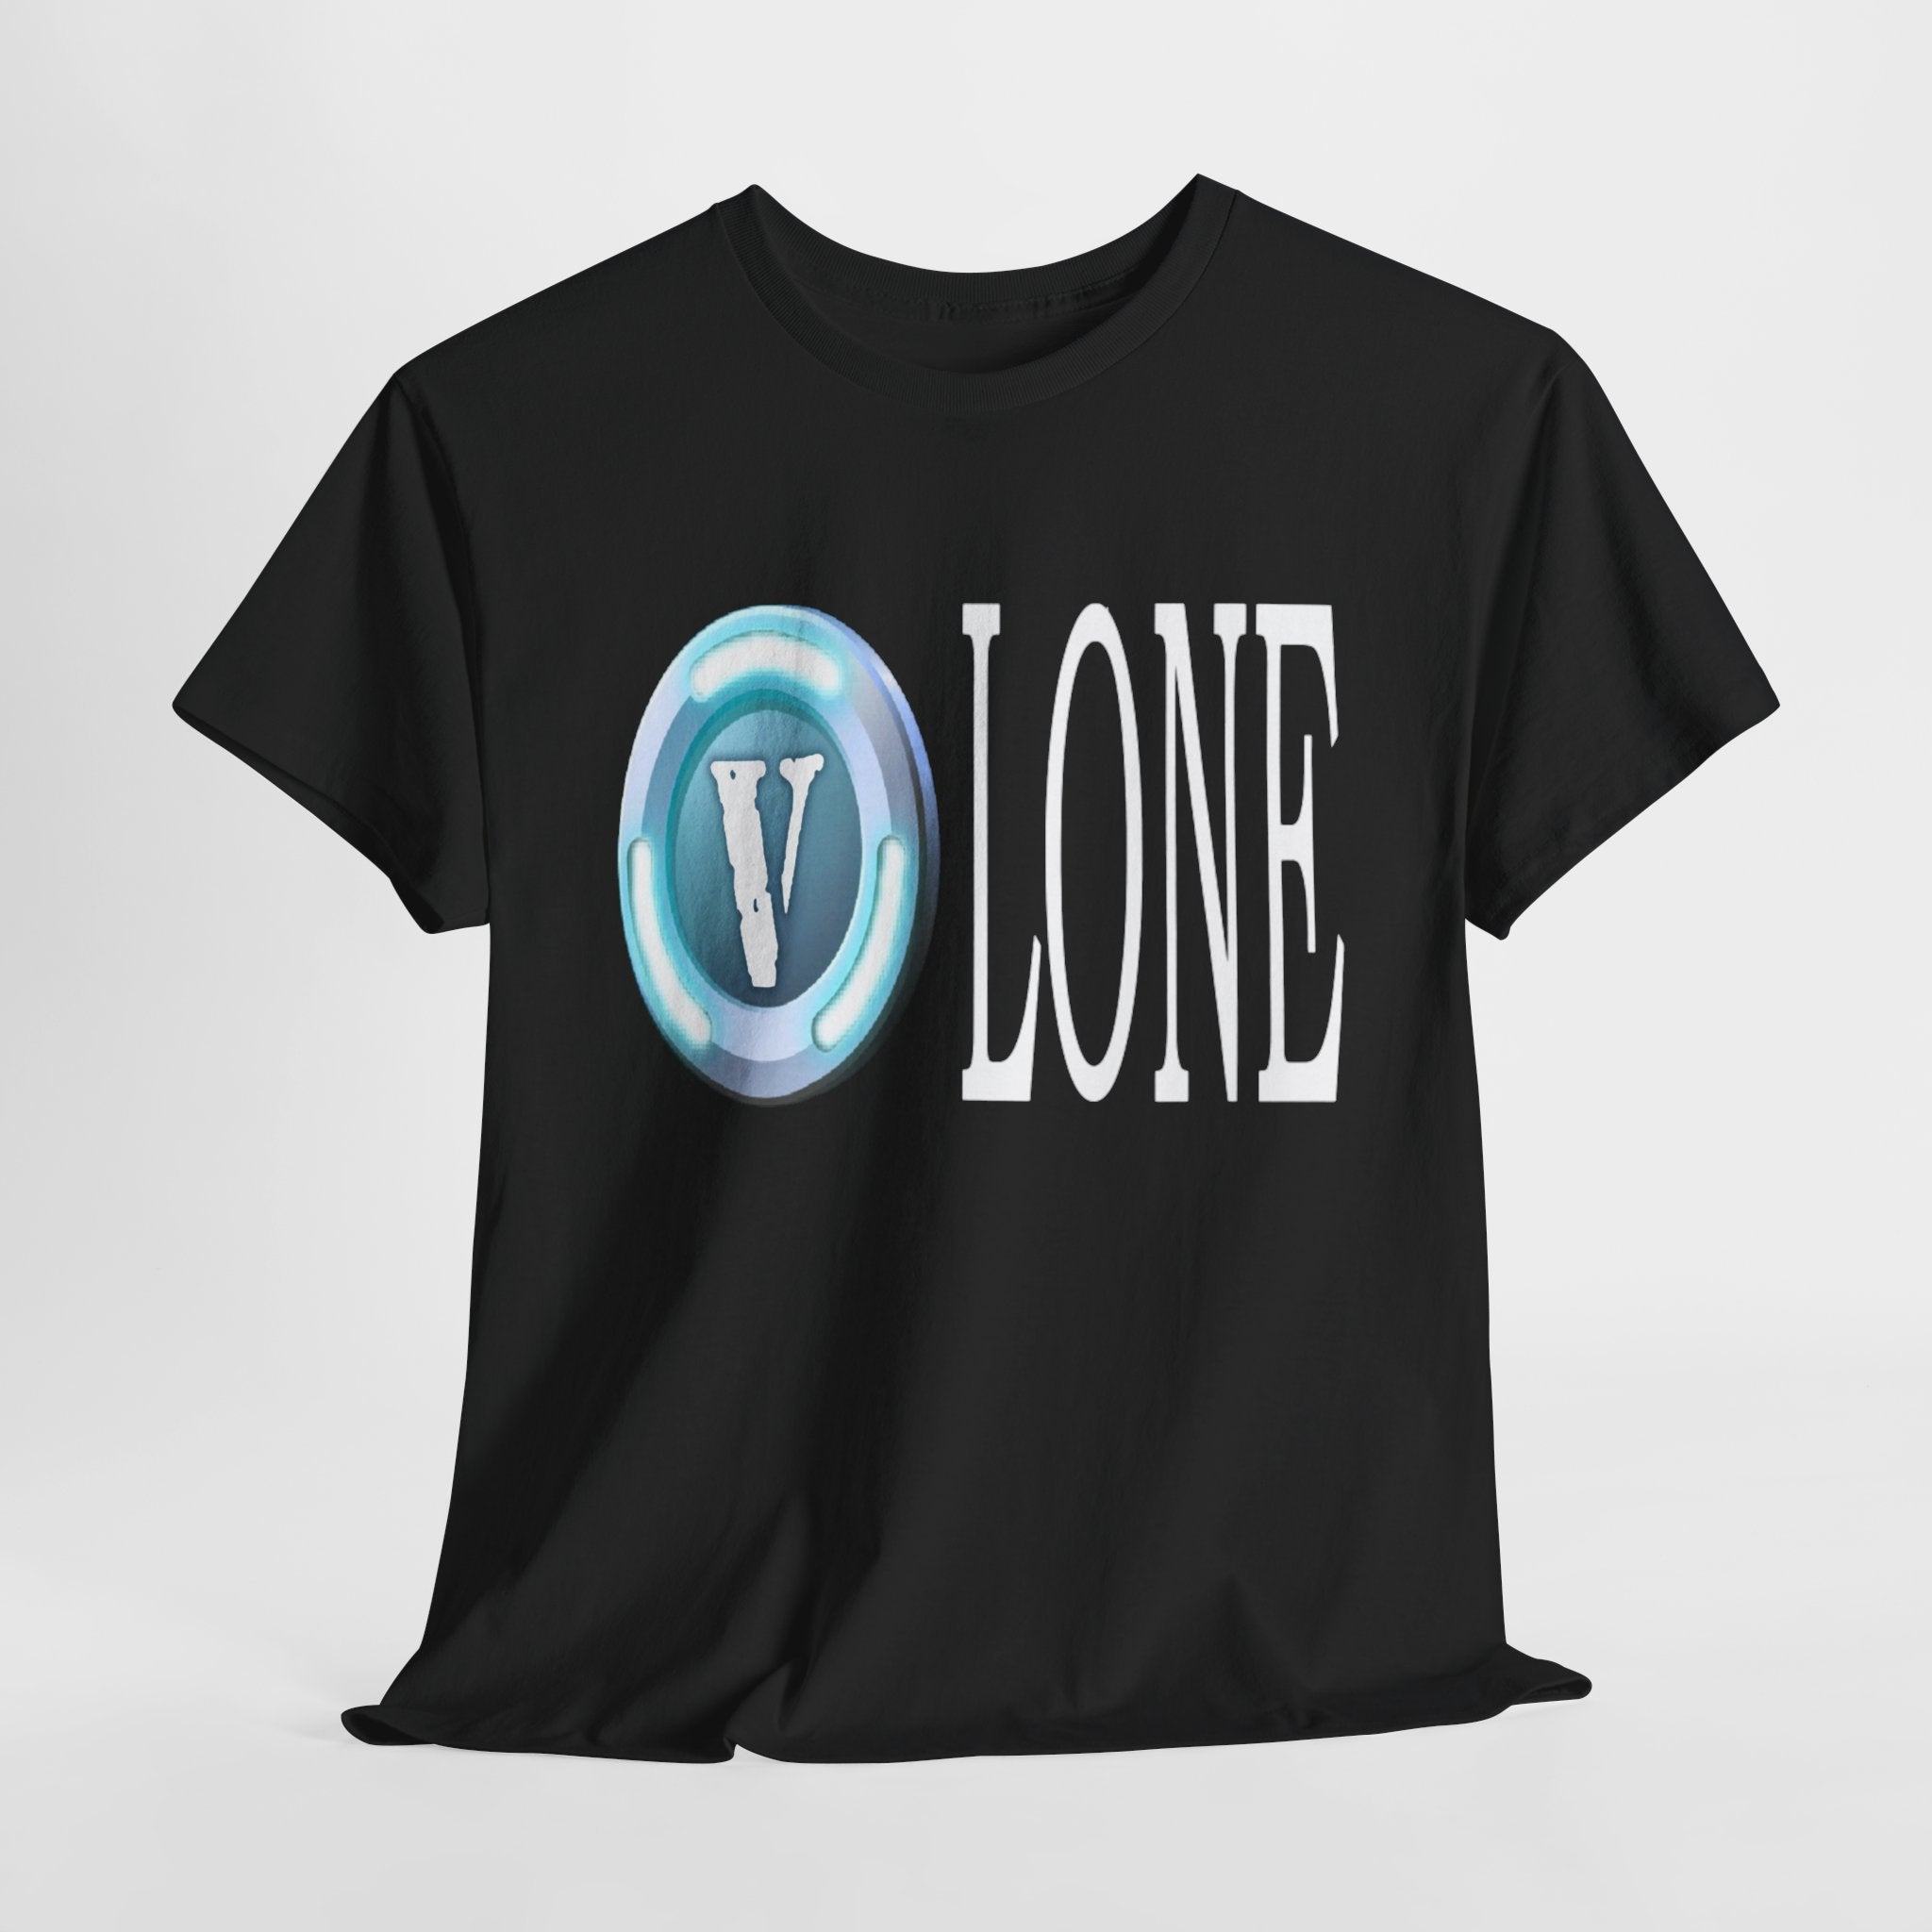 VLONE V-BUCKS Fortnite Shirt (Just Front Graphic)